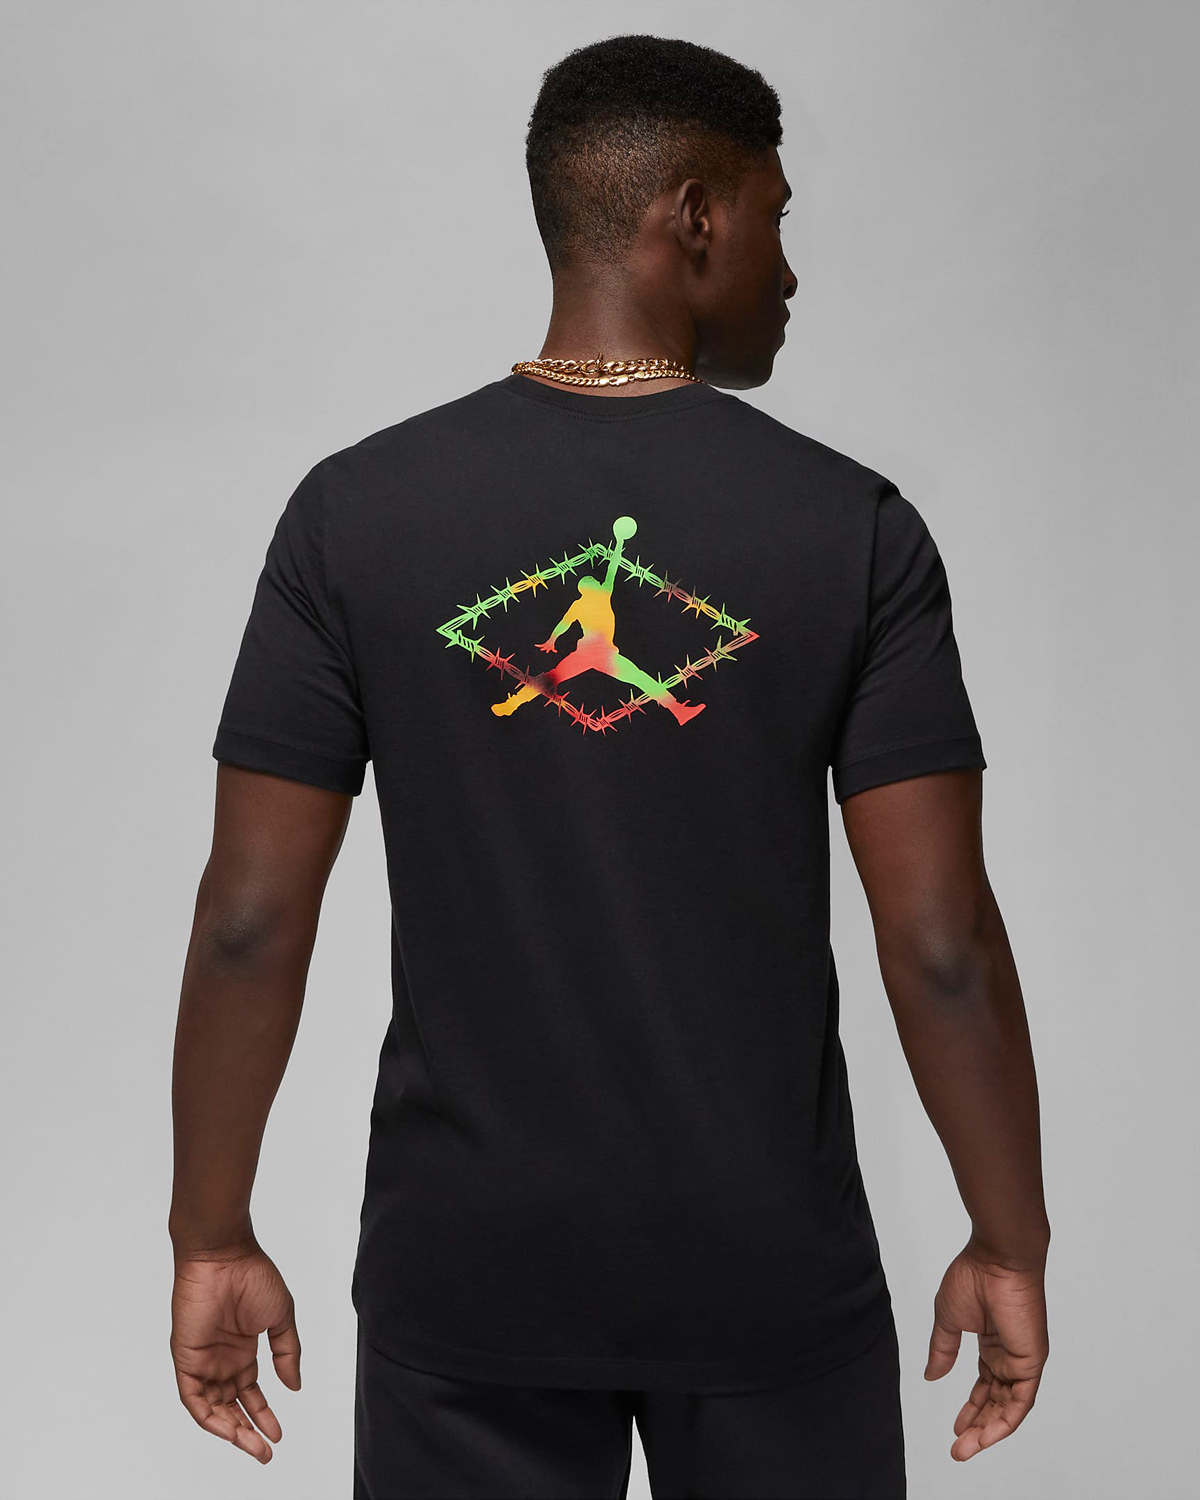 jordan-flight-mvp-t-shirt-black-taxi-green-red-2